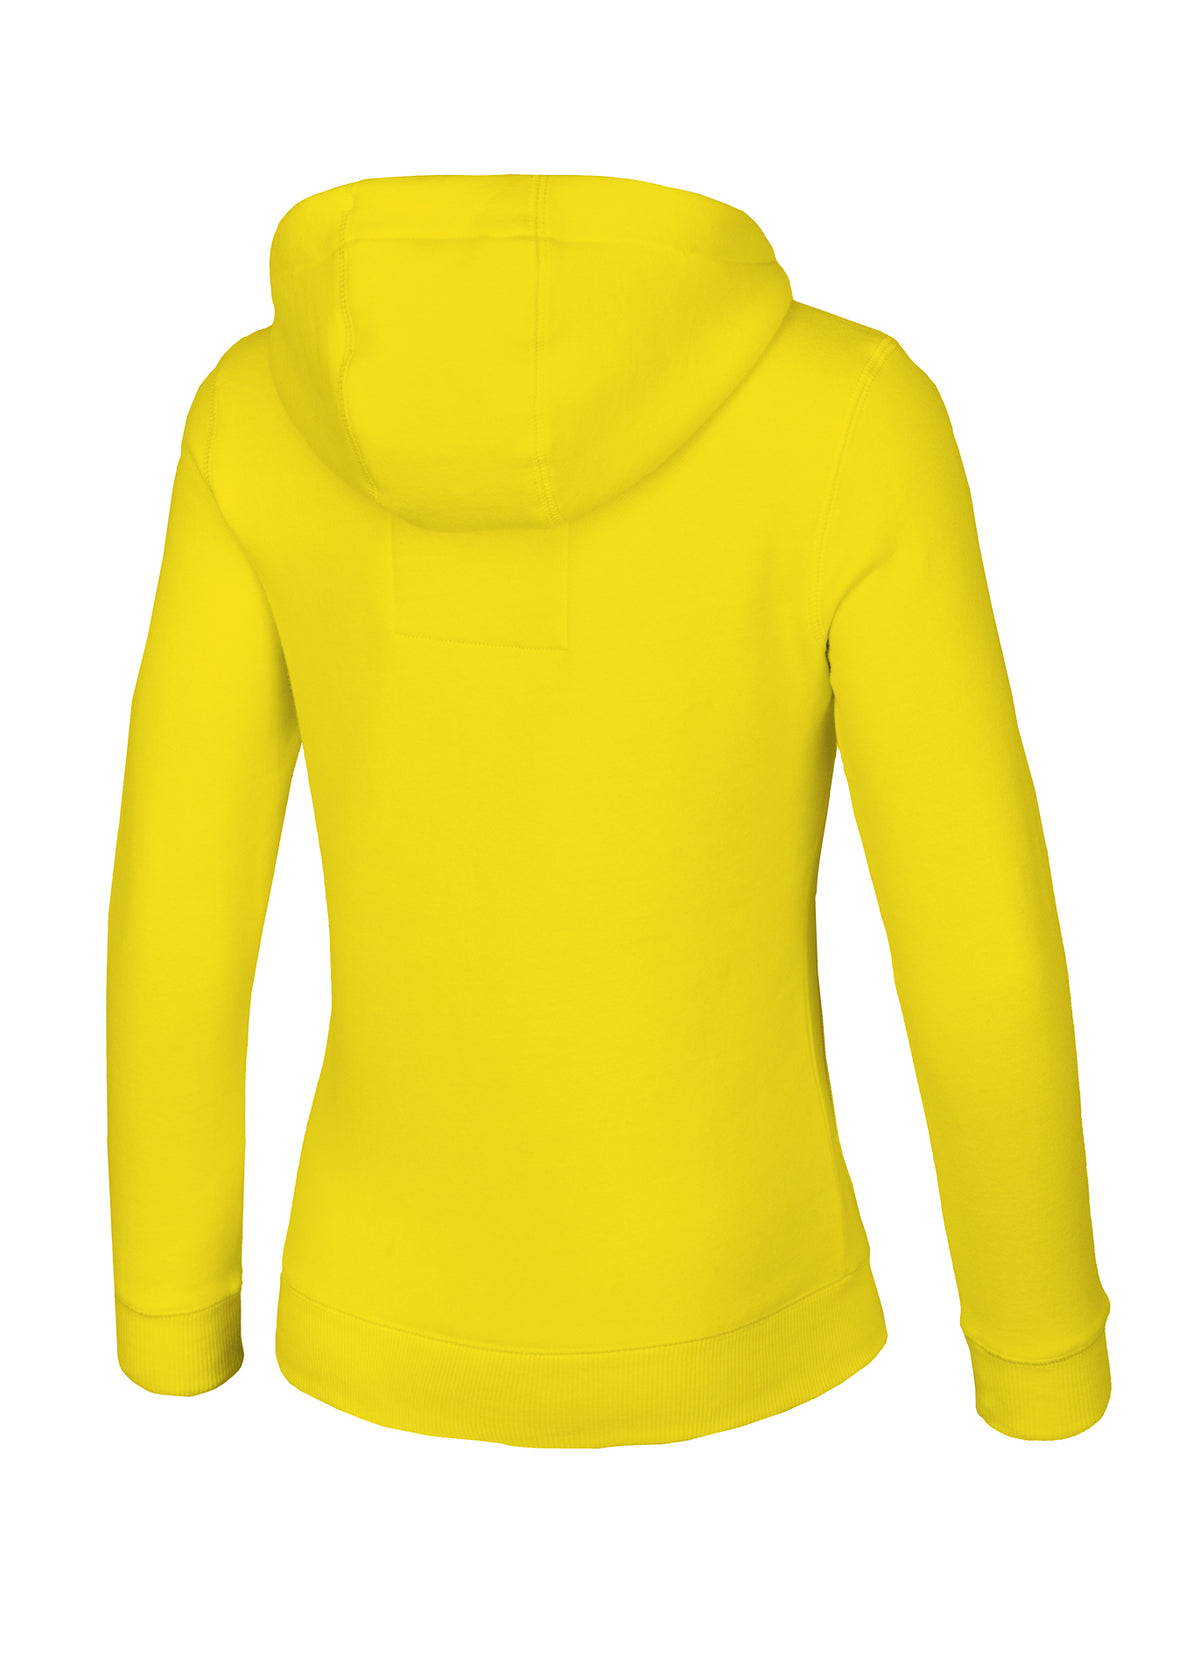 CLASSIC BOXING 2 Yellow hoodie.